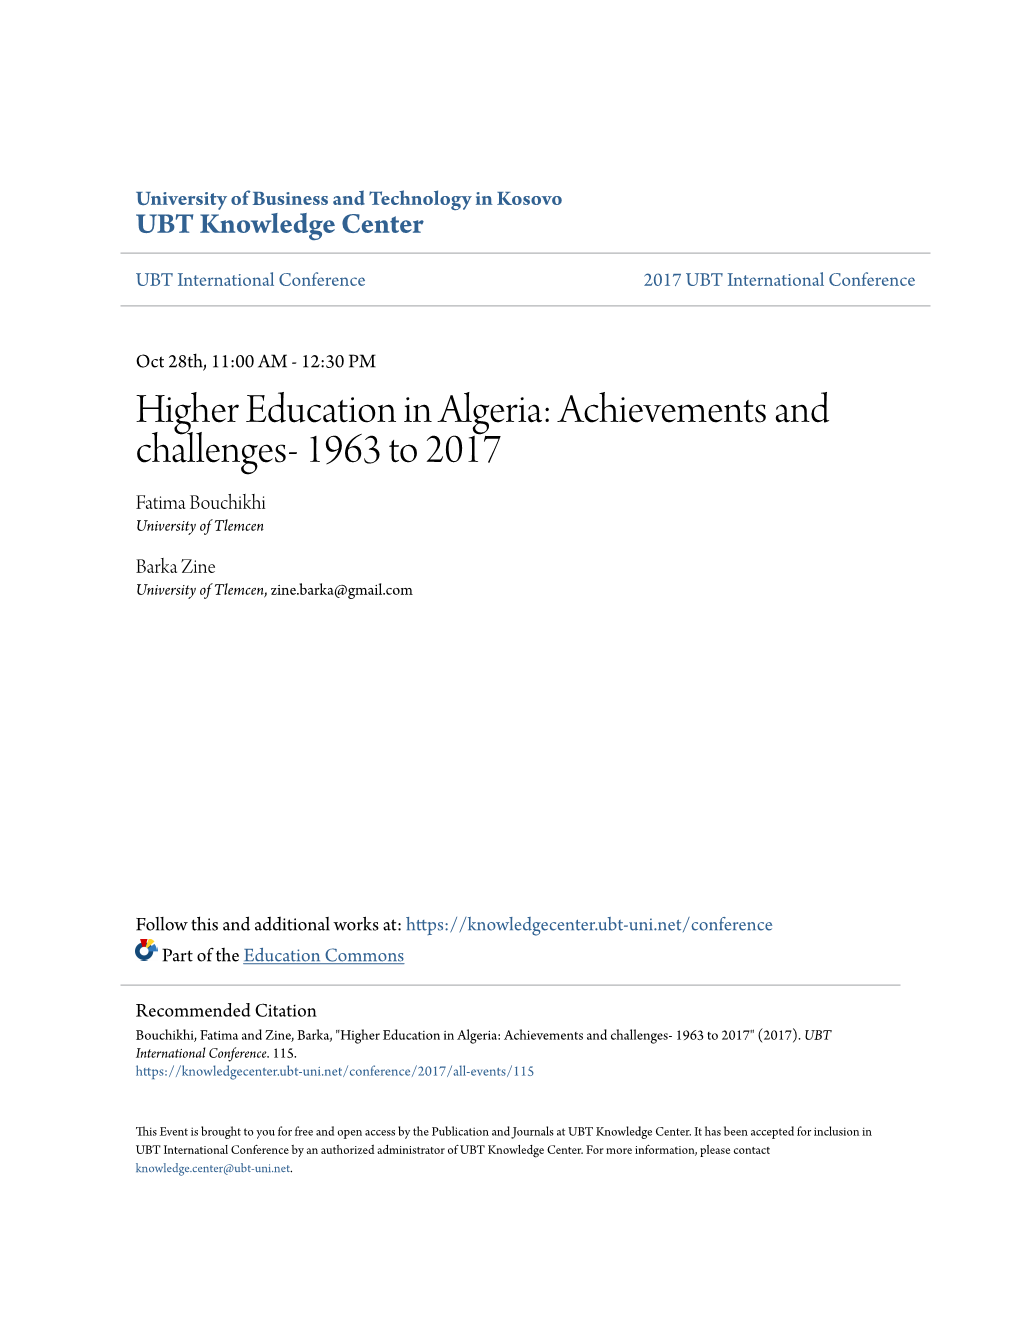 Higher Education in Algeria: Achievements and Challenges- 1963 to 2017 Fatima Bouchikhi University of Tlemcen